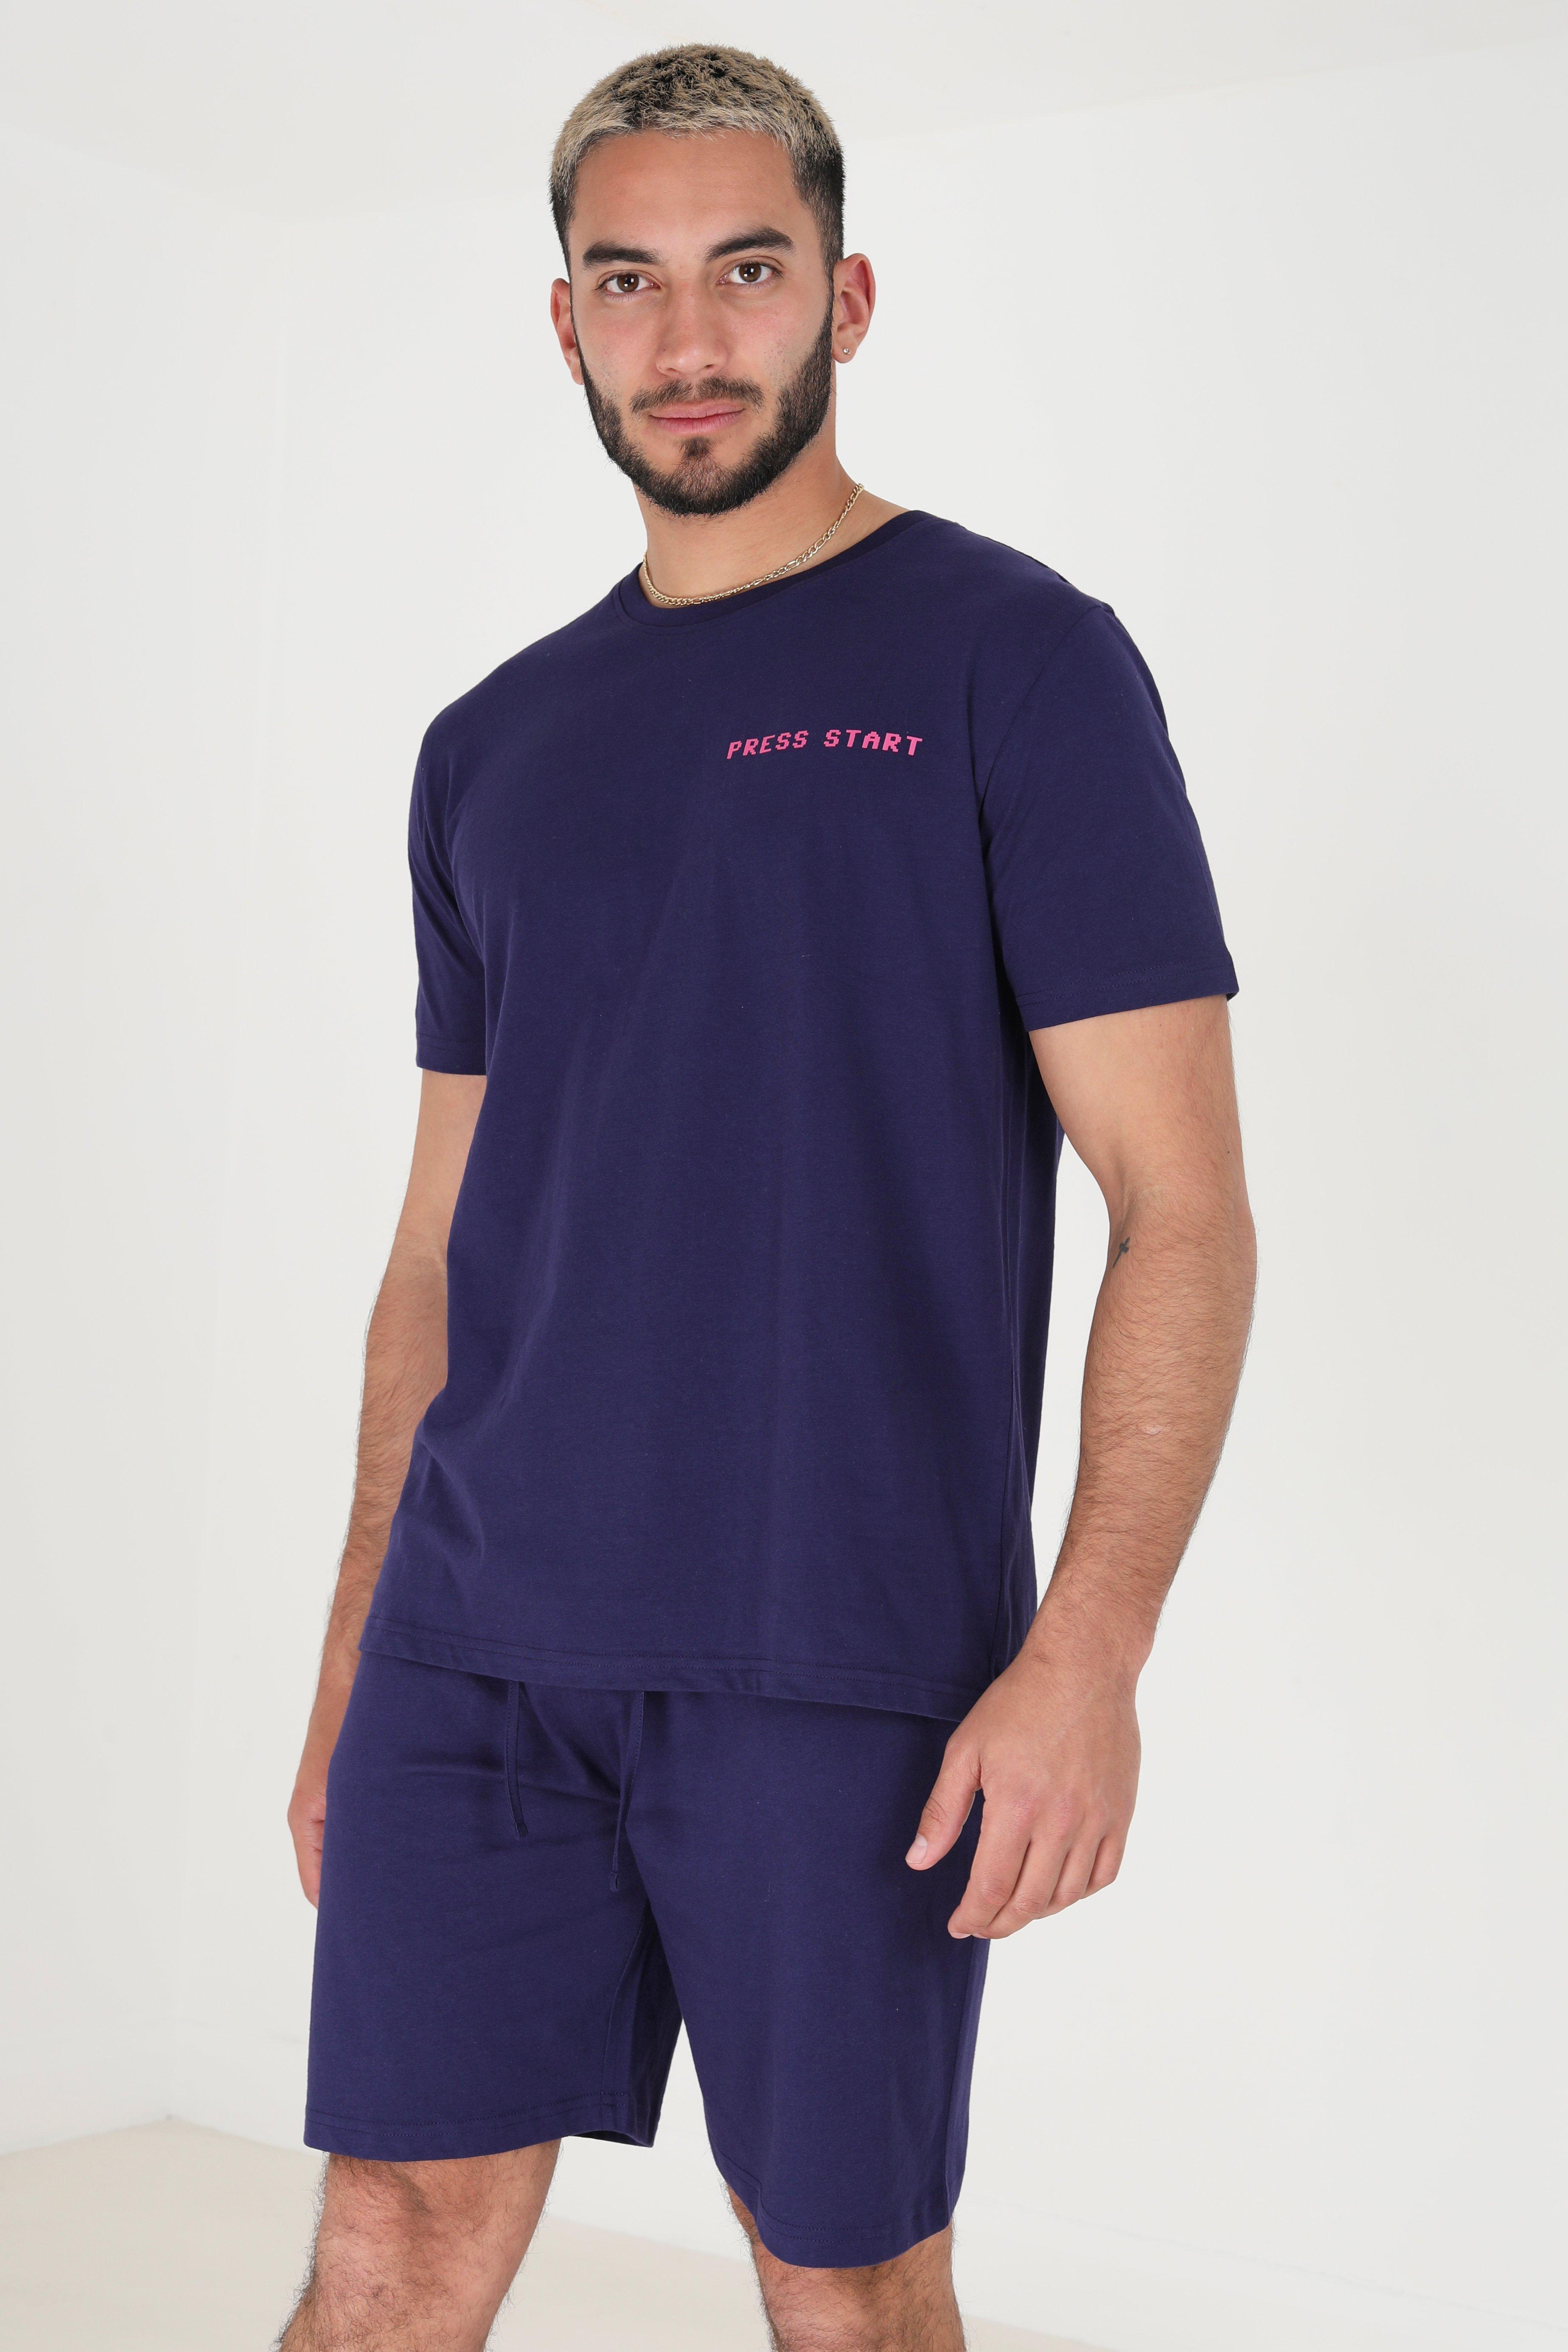 Nightwear | 'Start' Cotton Jersey Back Print Shortie Pyjama Set | Brave ...